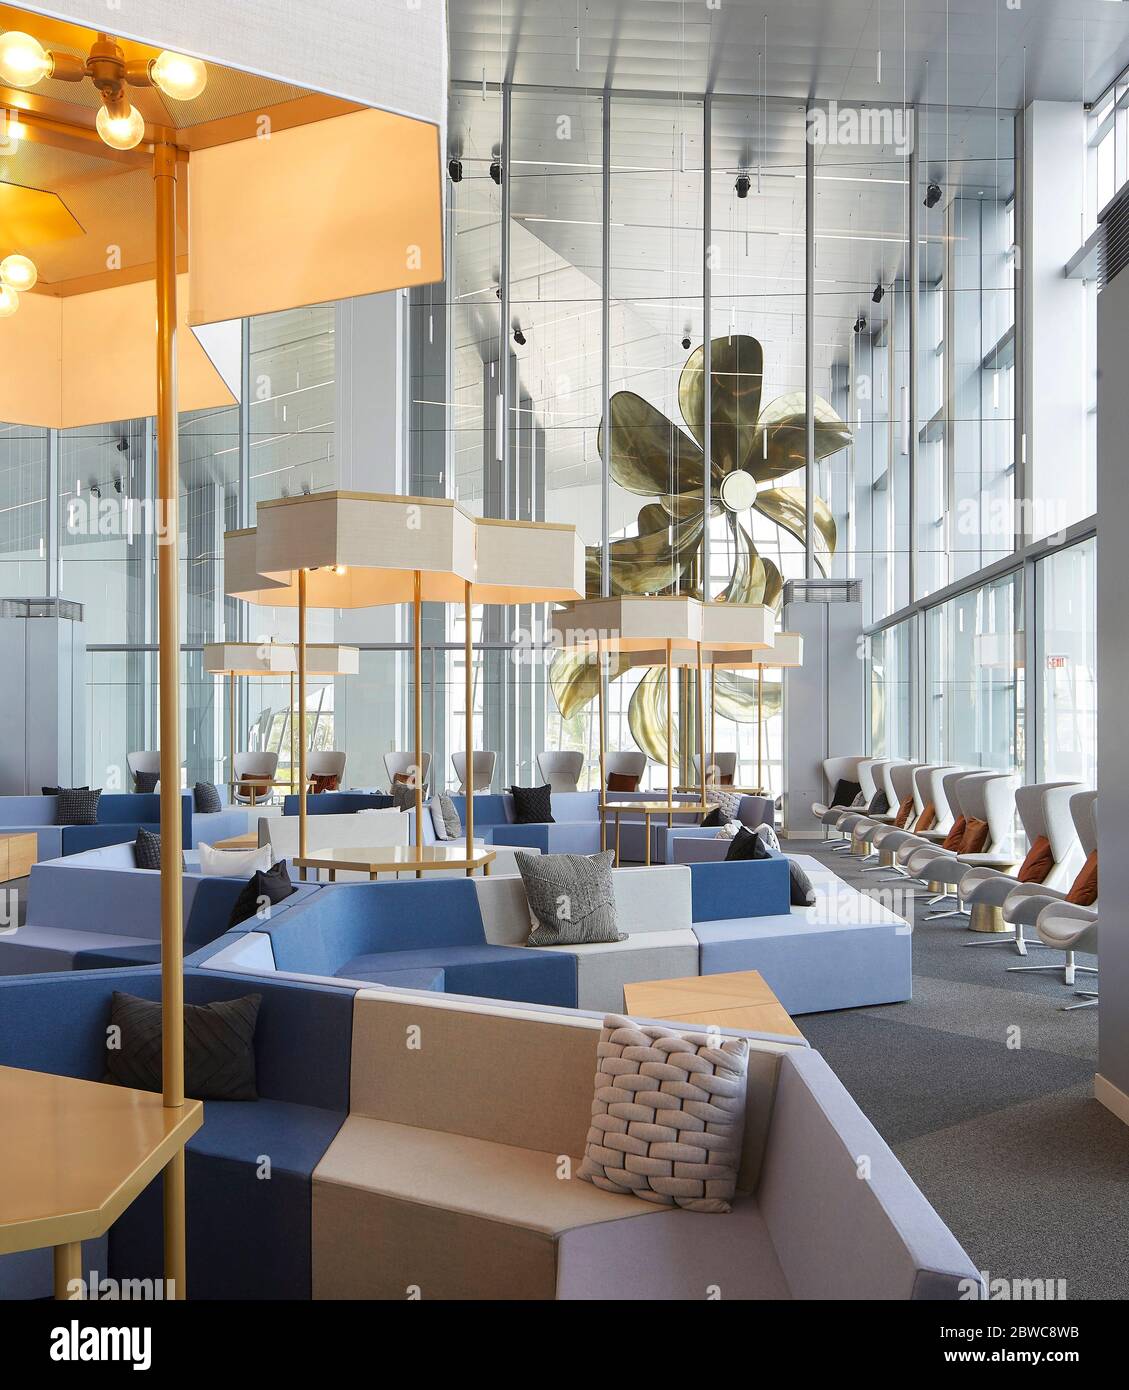 Lounge interior. Royal Caribbean Miami Cruise Terminal, Miami, United States. Architect: Broadway Malyan Limited, 2019. Stock Photo